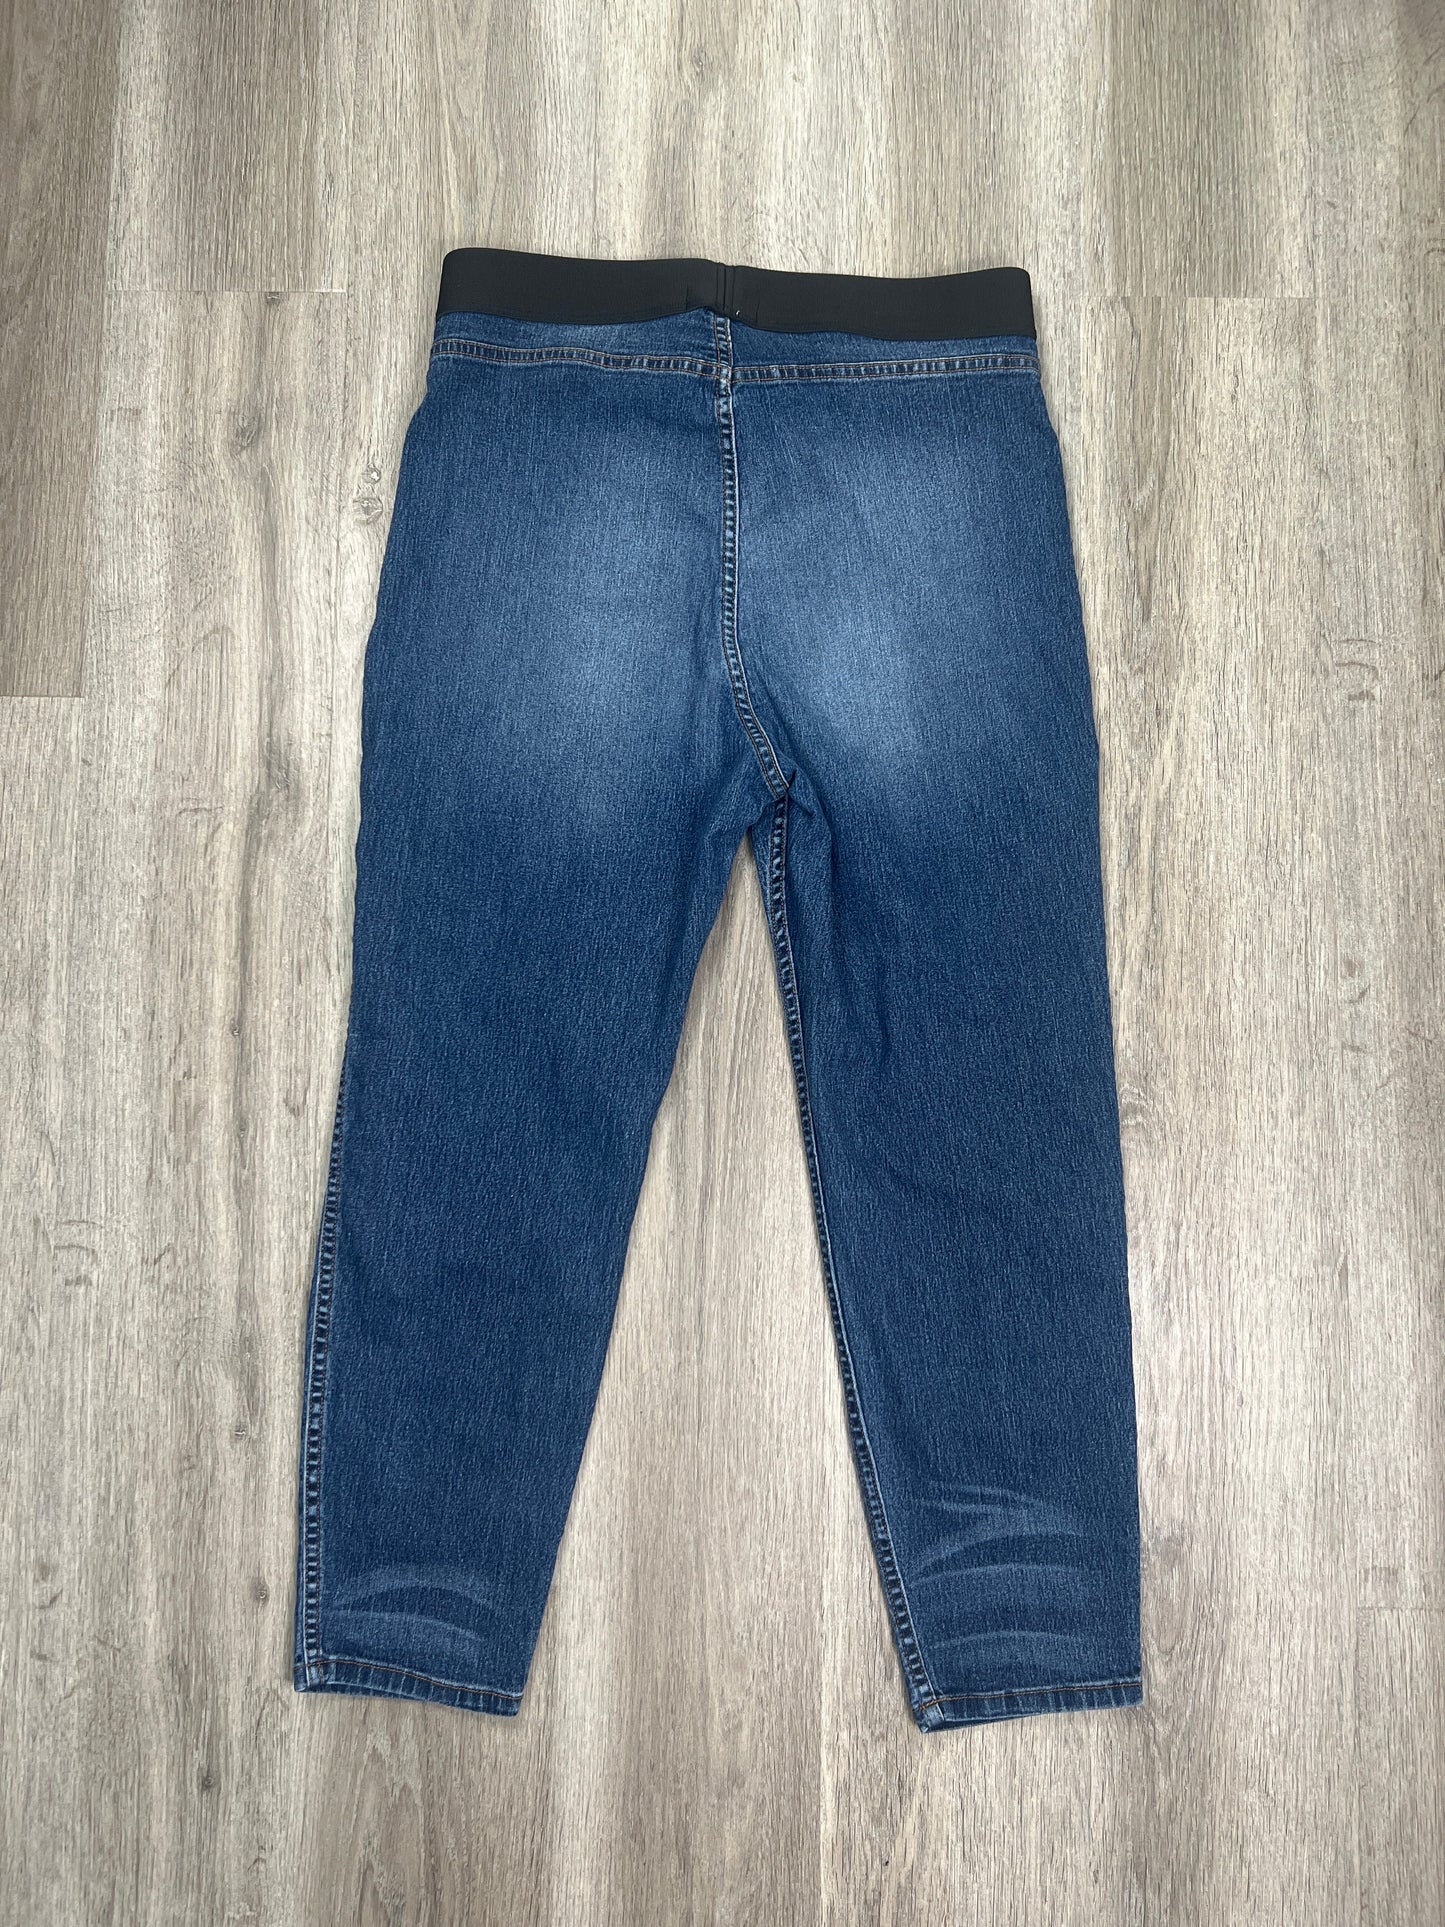 Jeans Cropped By Karen Kane  Size: 18